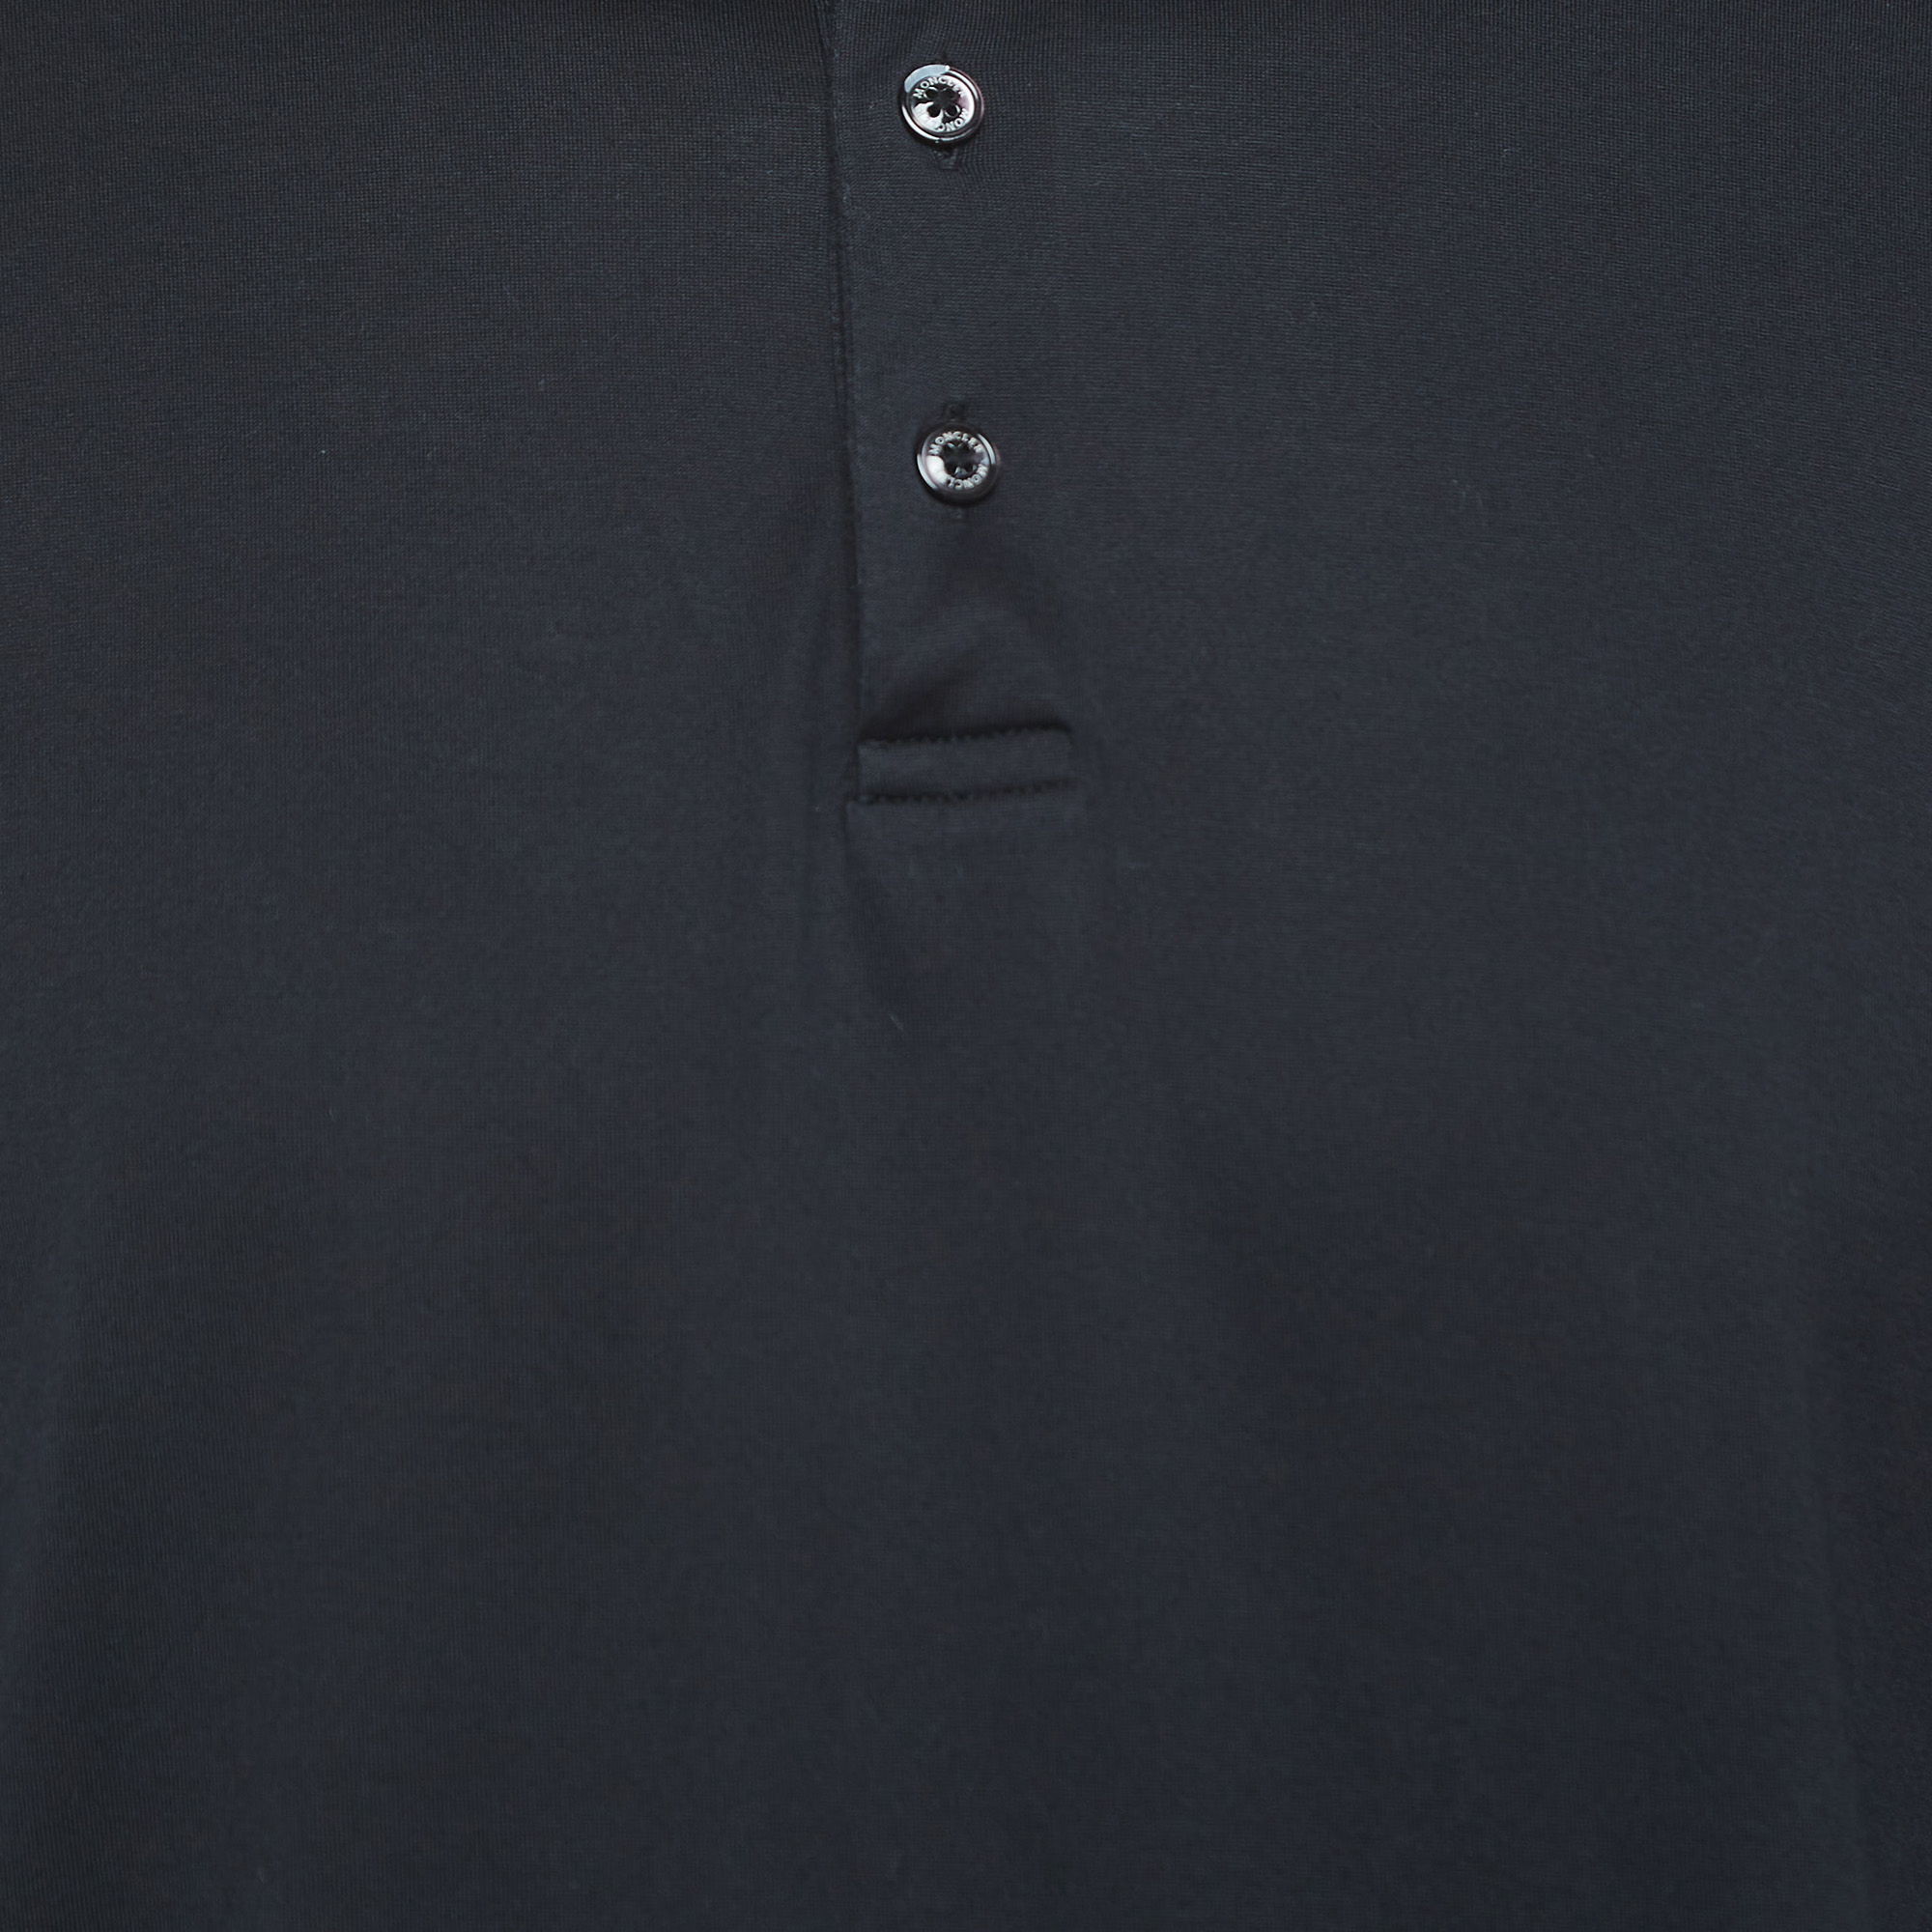 Moncler Black Cotton Long Sleeve Polo T-Shirt L